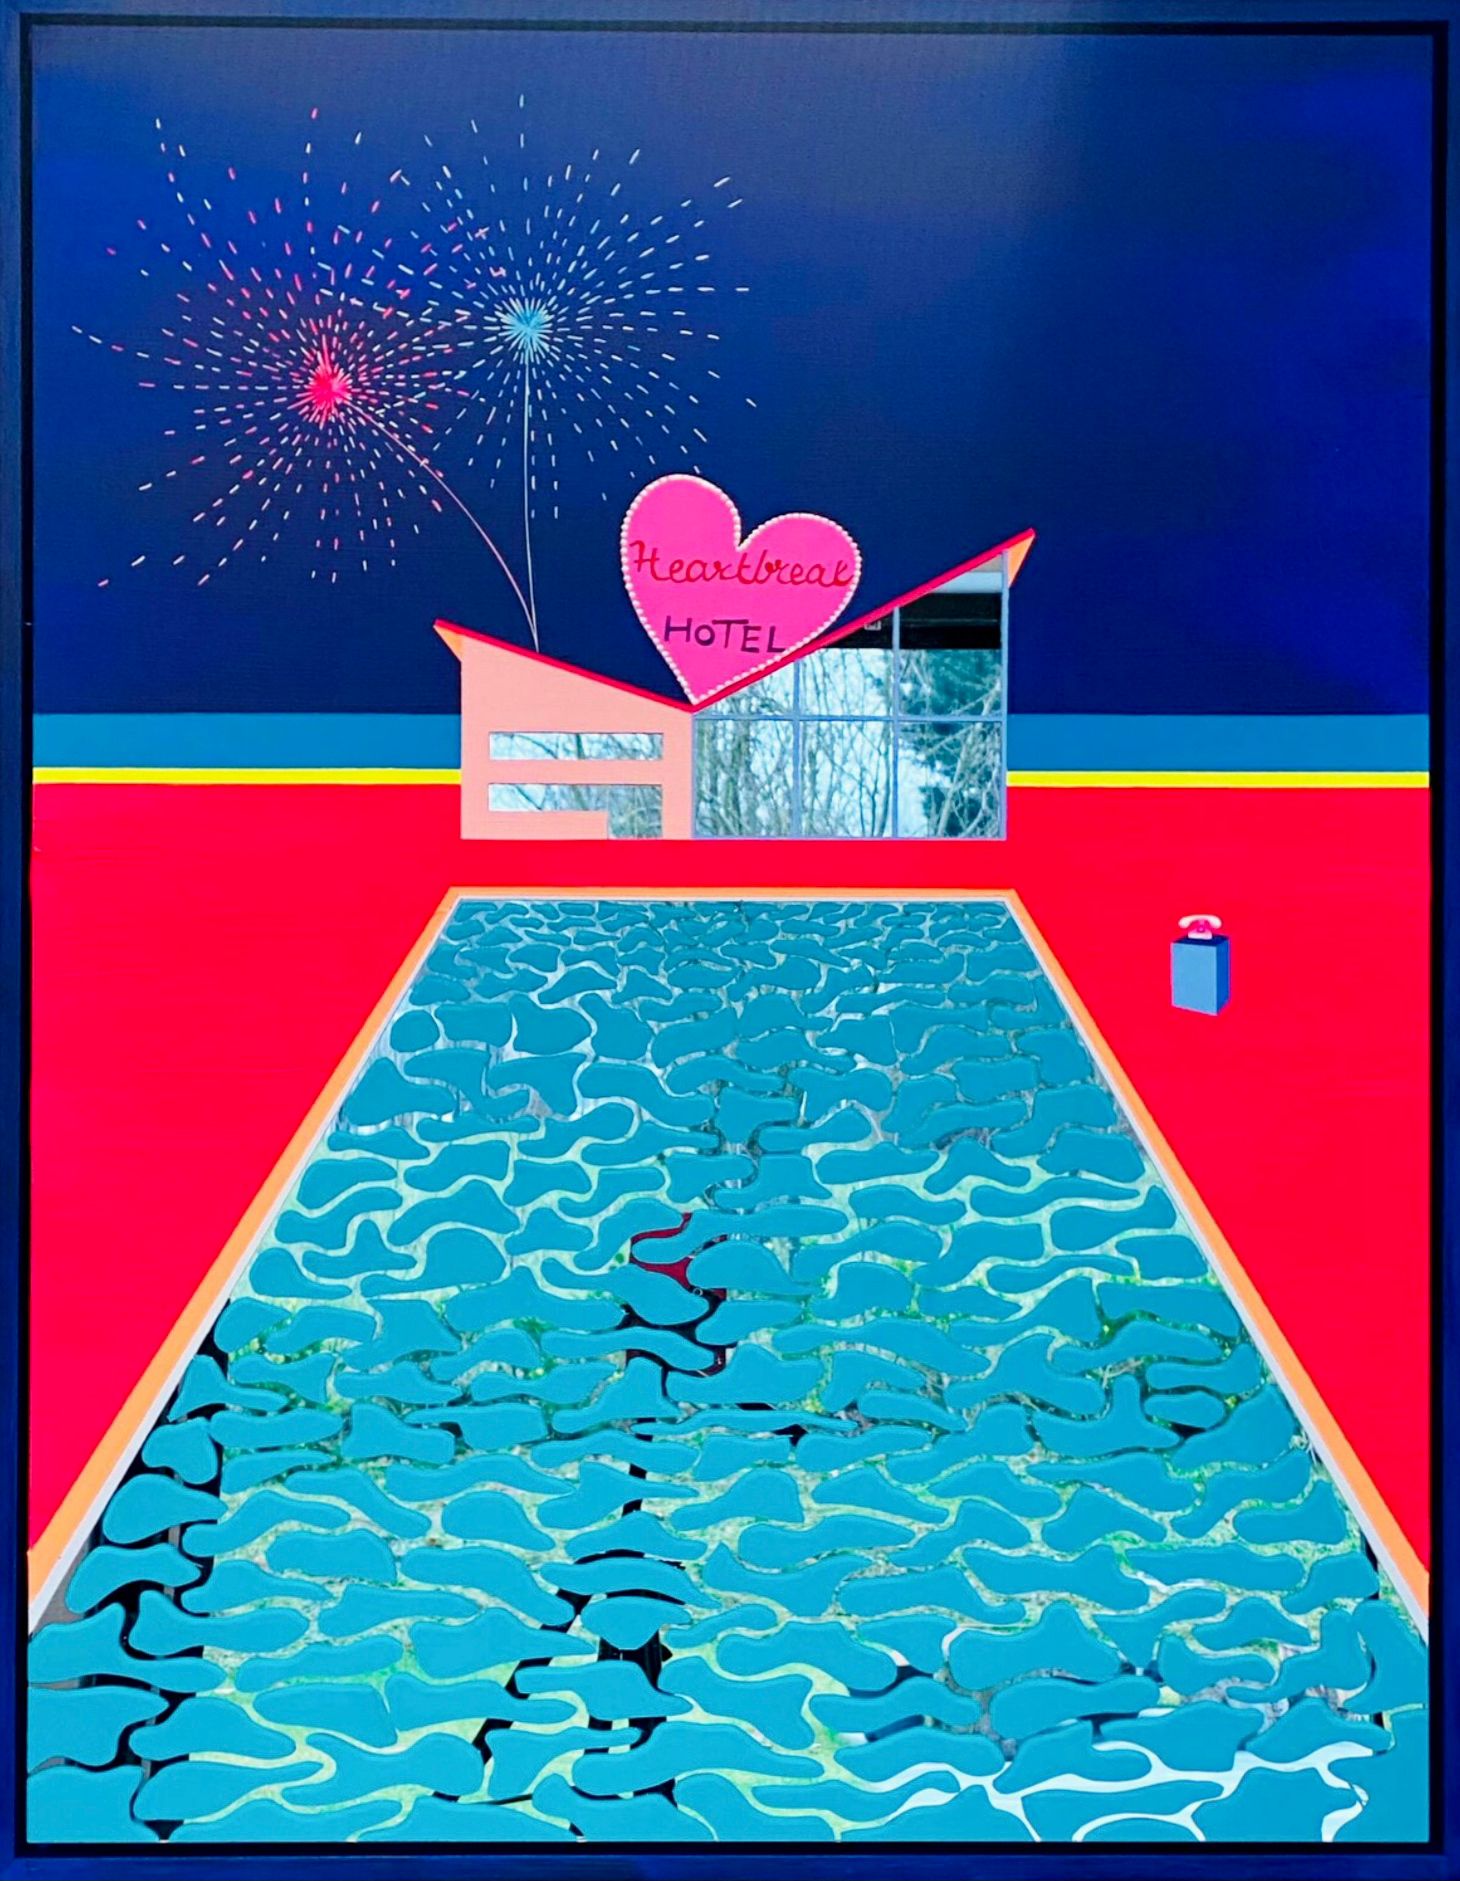 Isabelle Derecque, "Heartbreak hotel" 彩色绘画，在一个神秘的彩色地方，居住着海洋生物，以弹出式风格画在plexi镜子上，色彩欢快而有活力。通过几何学、透视、对比和反射进行可视化。